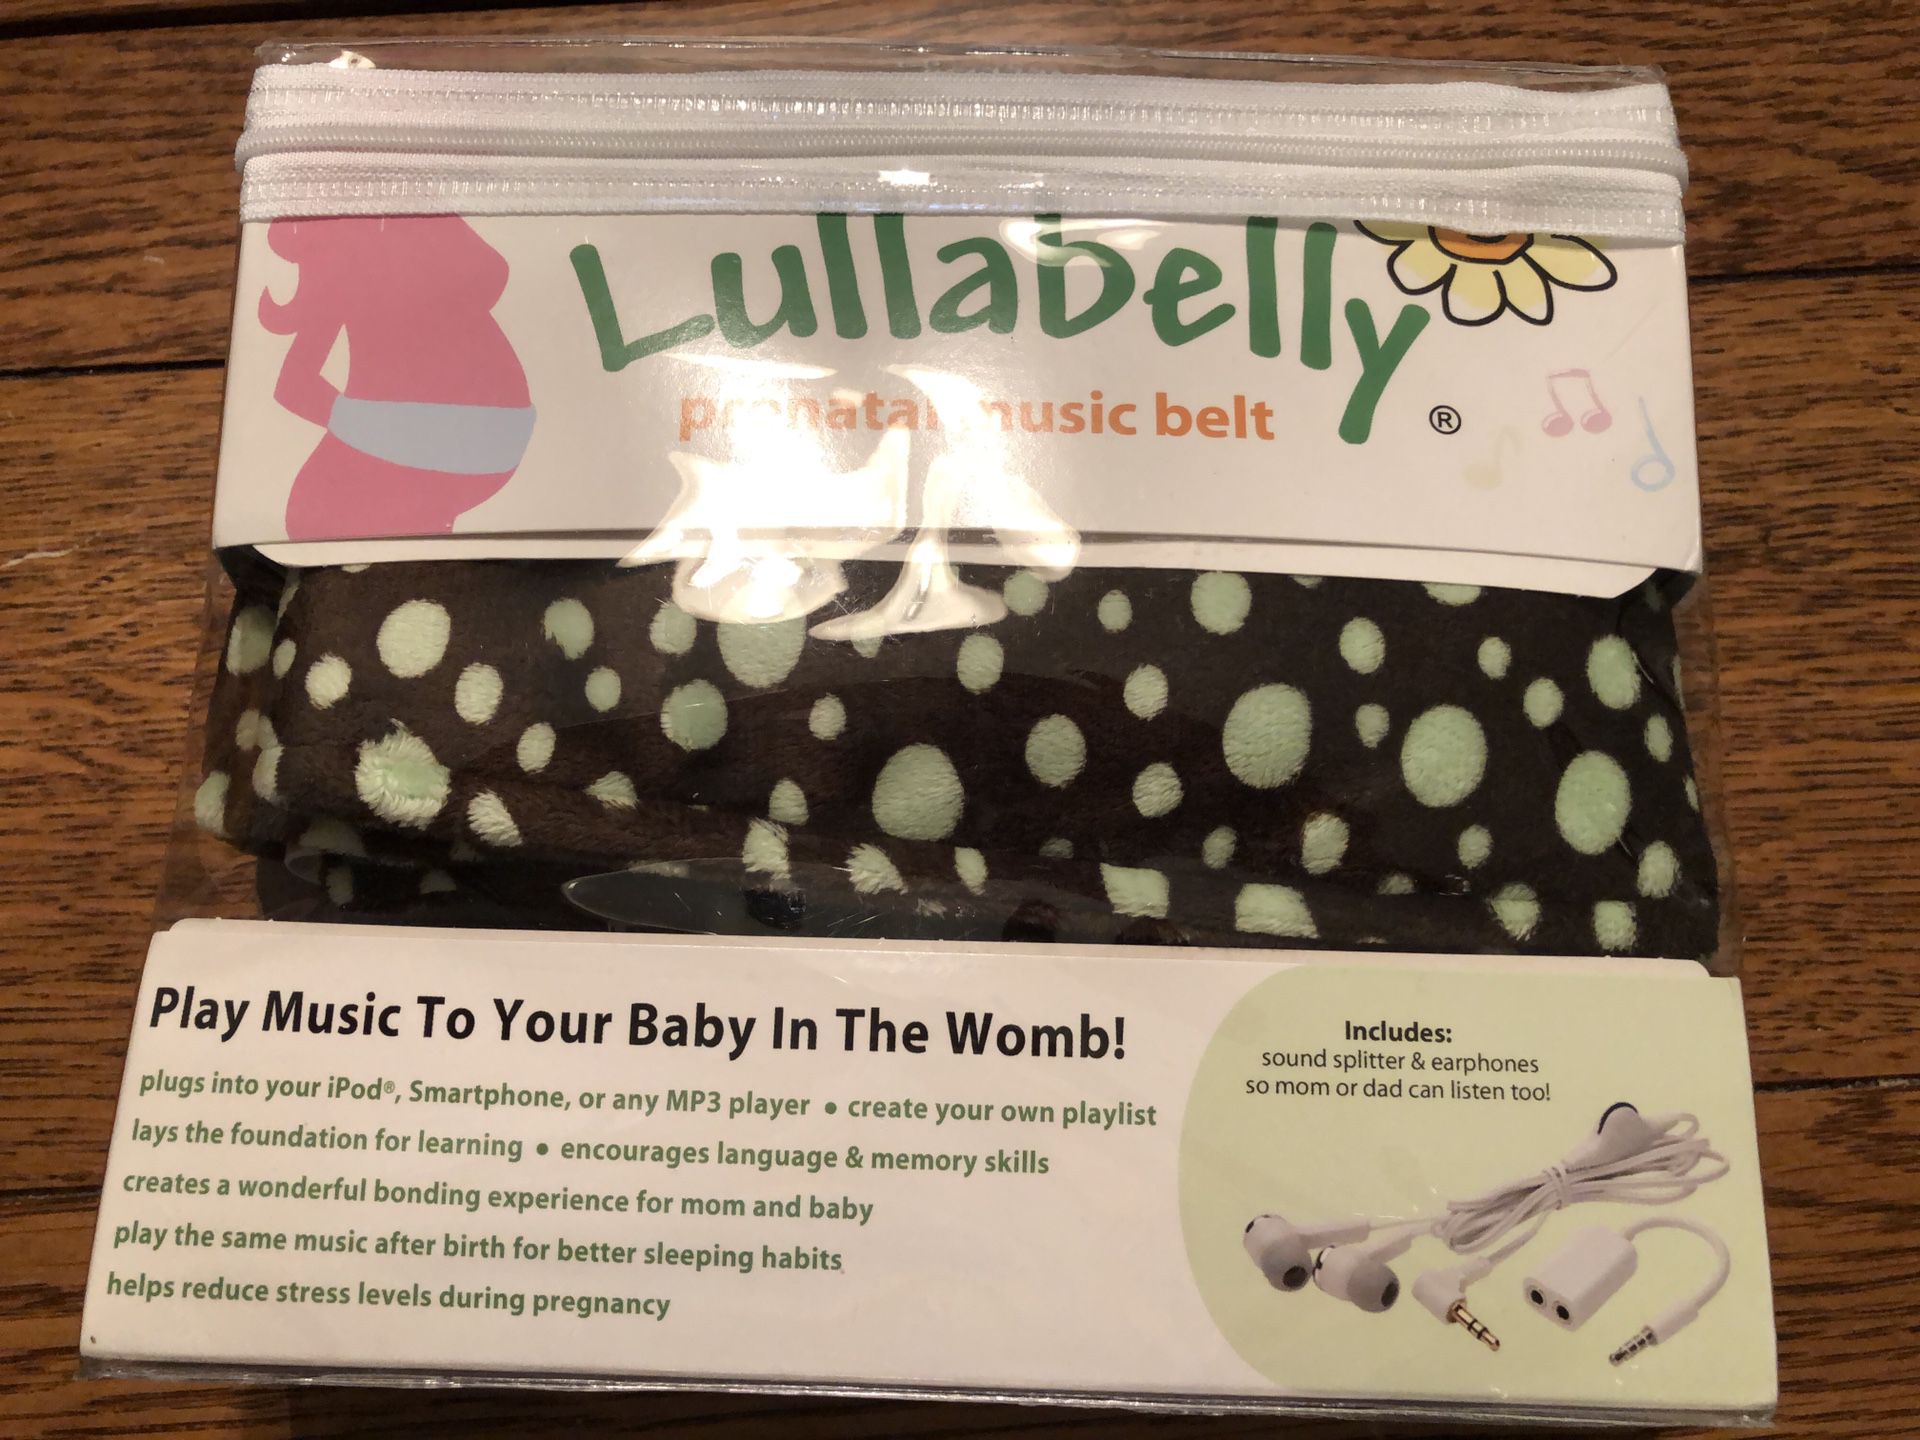 Lullabelly prenatal music belt